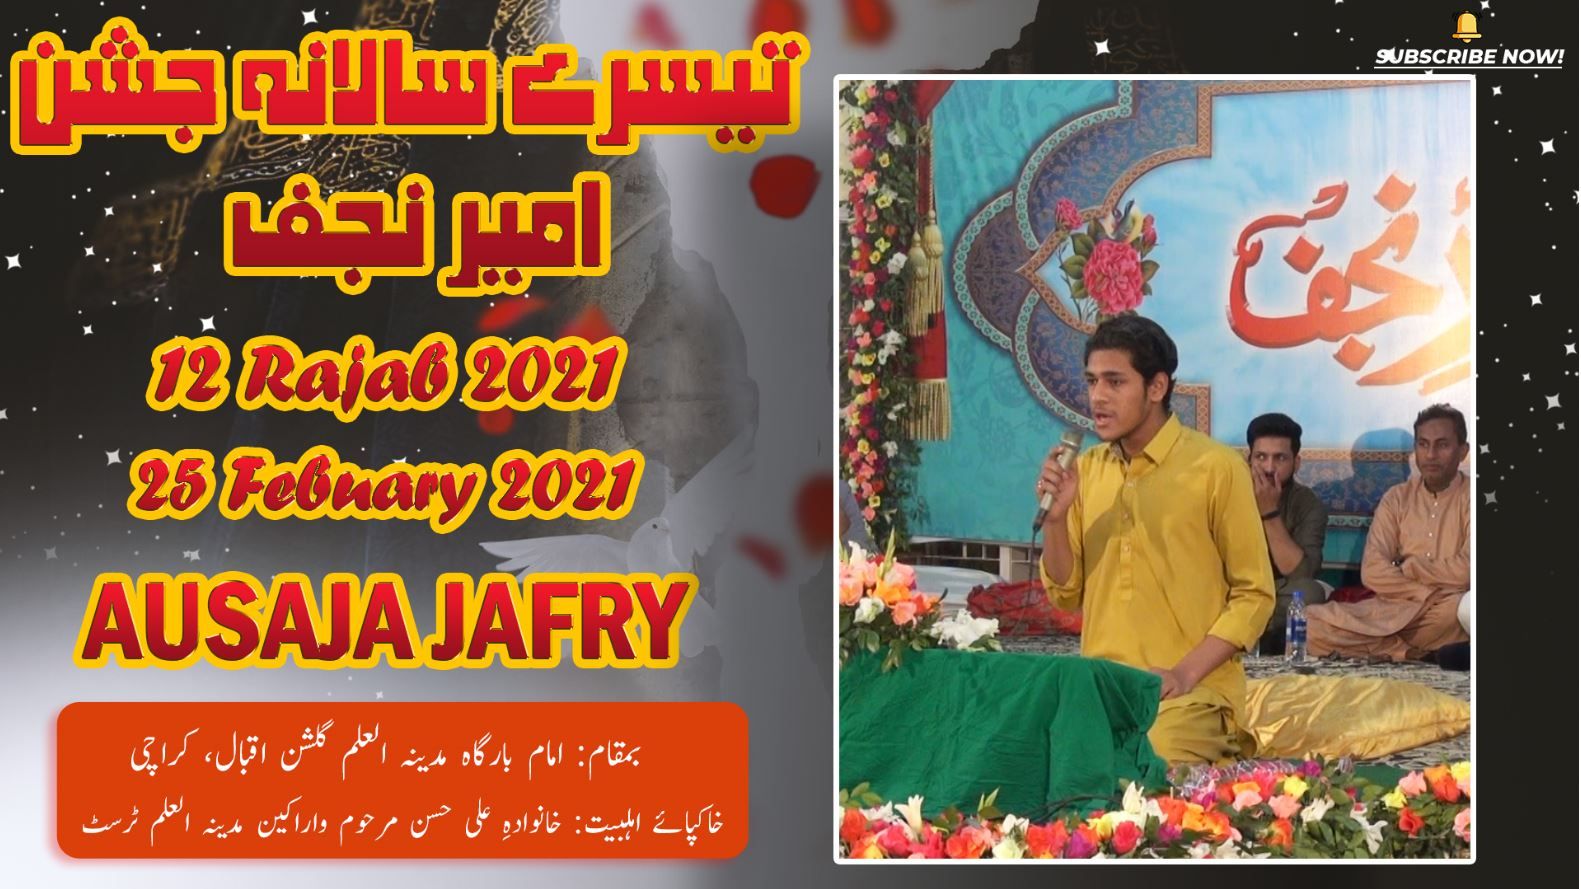 Manqabat | Ausaja Jafry | Jashan Ameer-e-Najaf - 12 Rajab 2021 - Imam Bargah Madina Tul Ilm Karachi